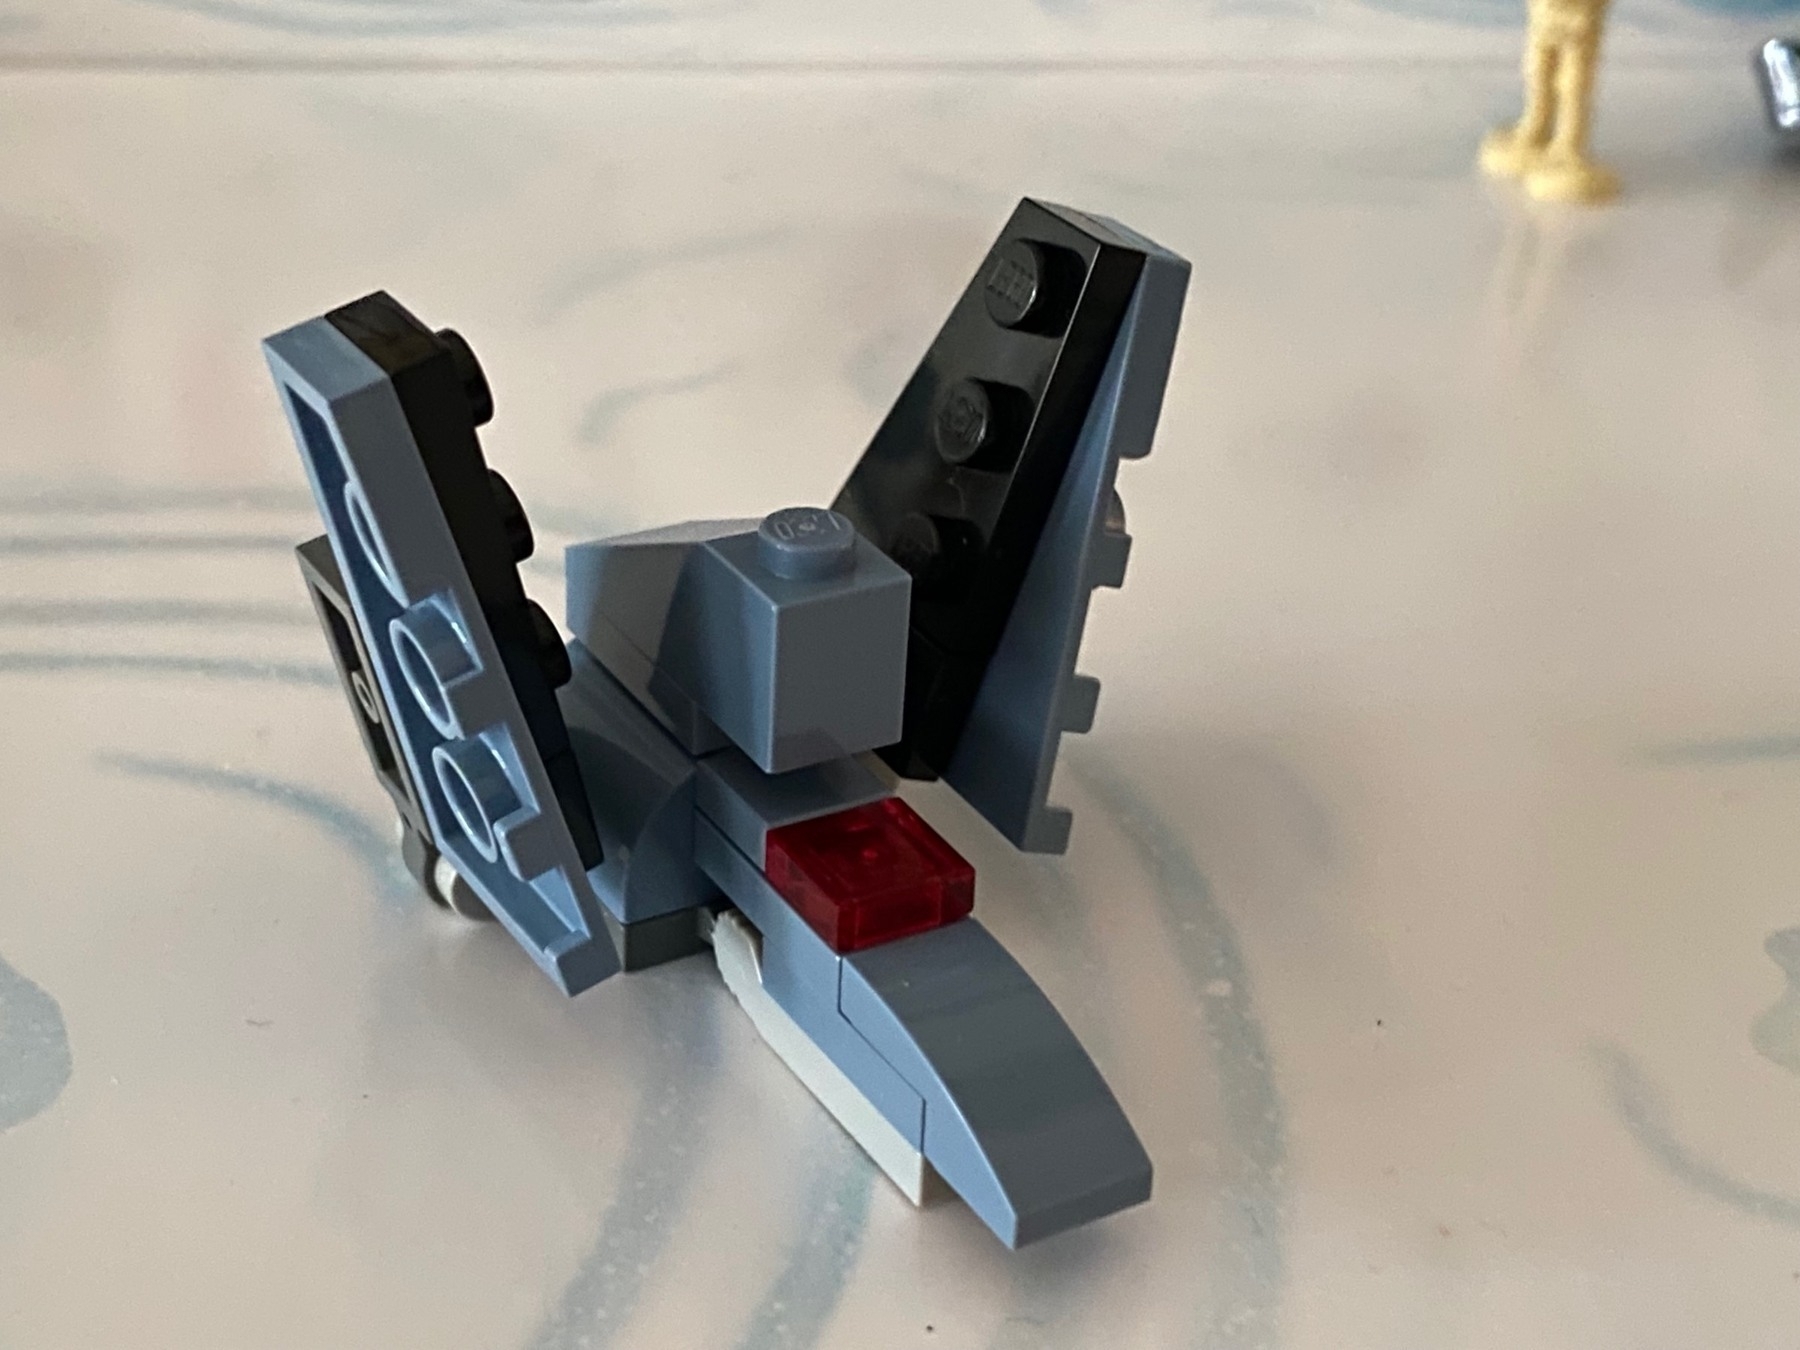 The Lego Bad Batch shuttle from the Star Wars Lego Advent calendar